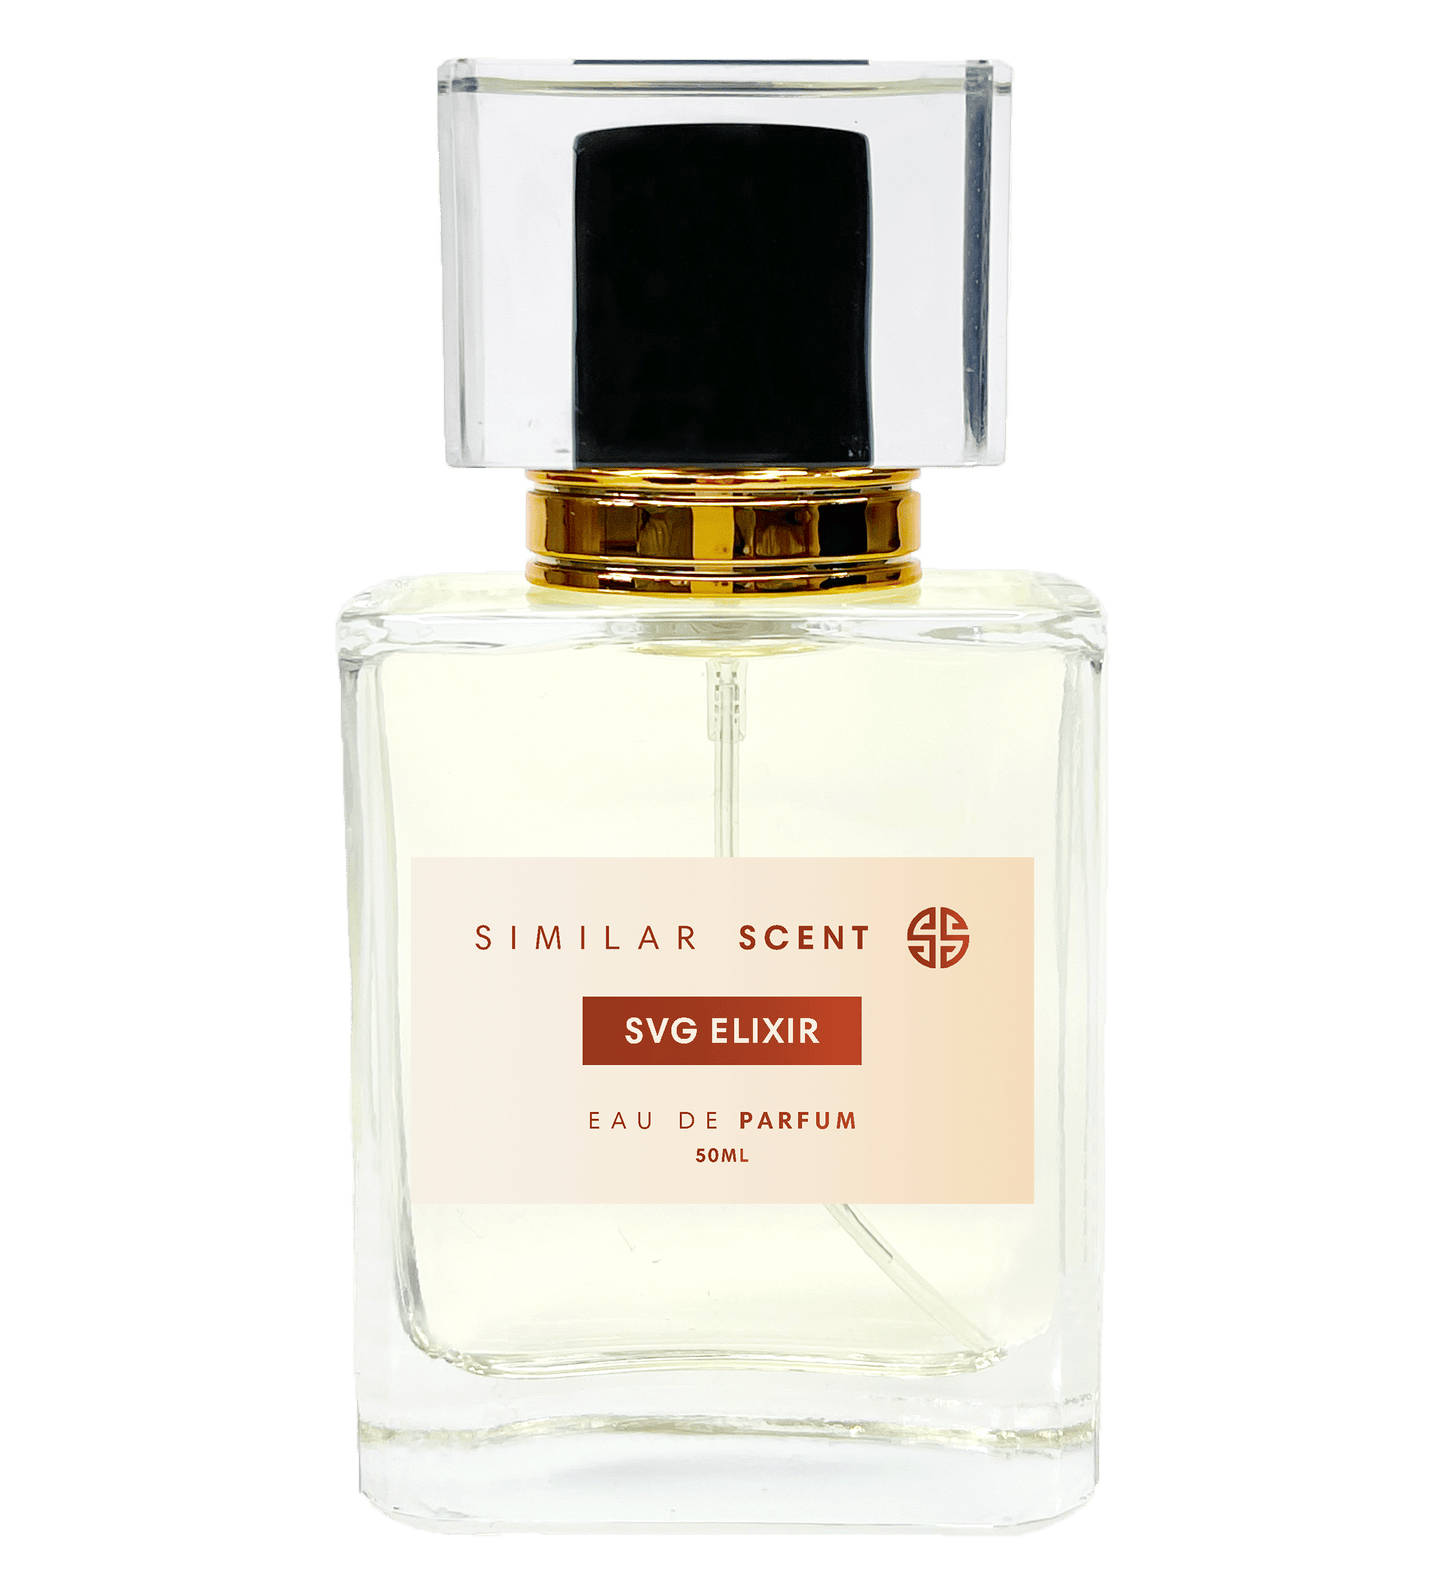 SVG ELIXIR goedkope parfum | Similar Scent